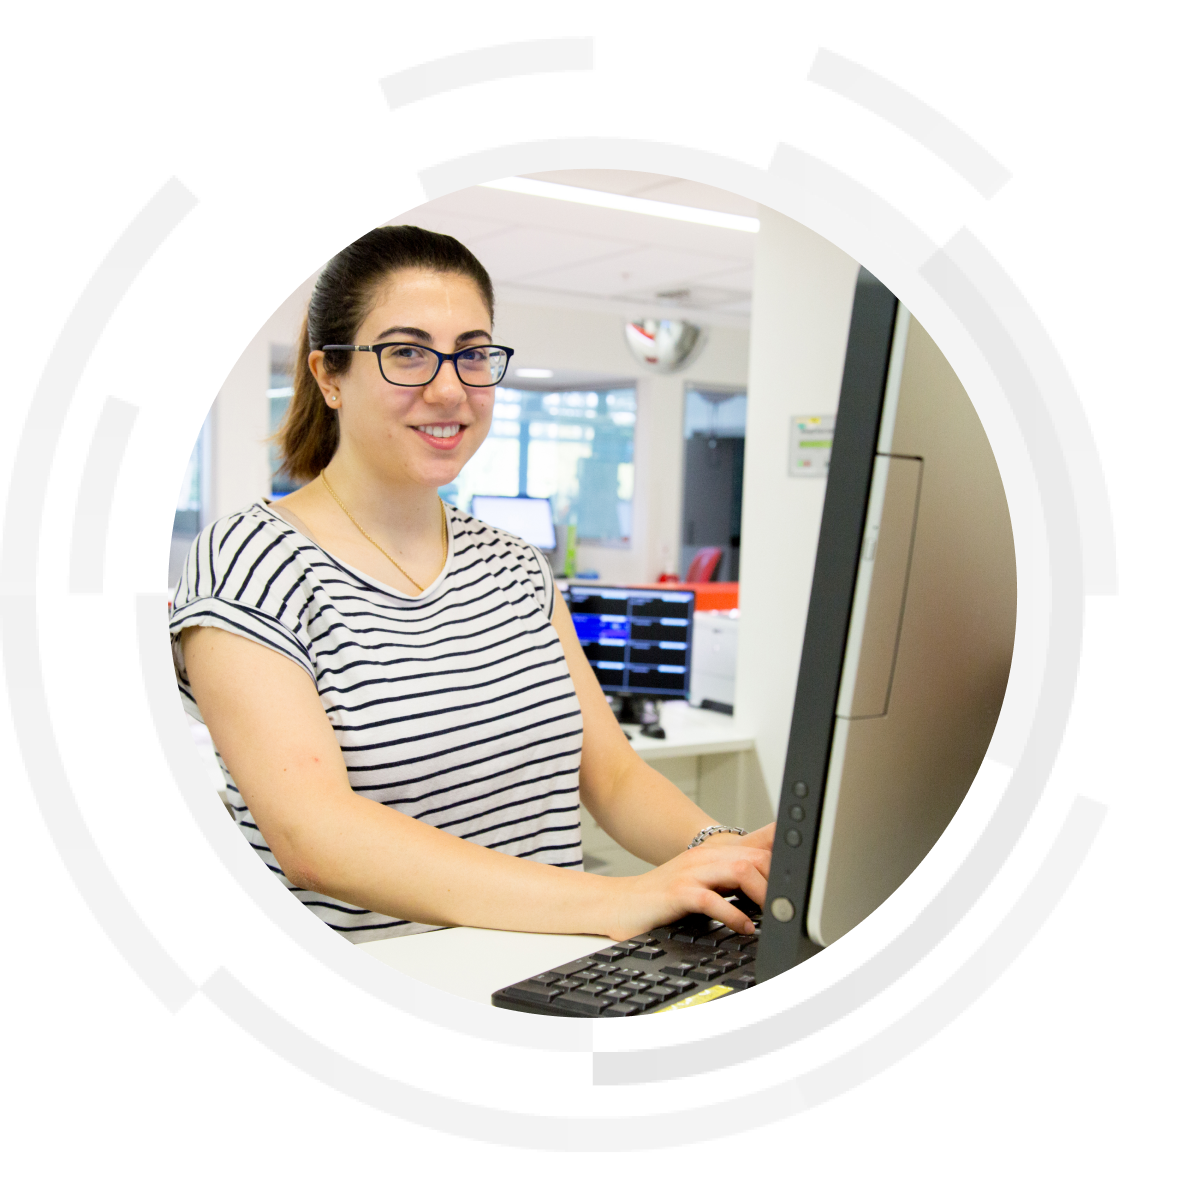 Smiling female doctor working at a desktop computer entering data.